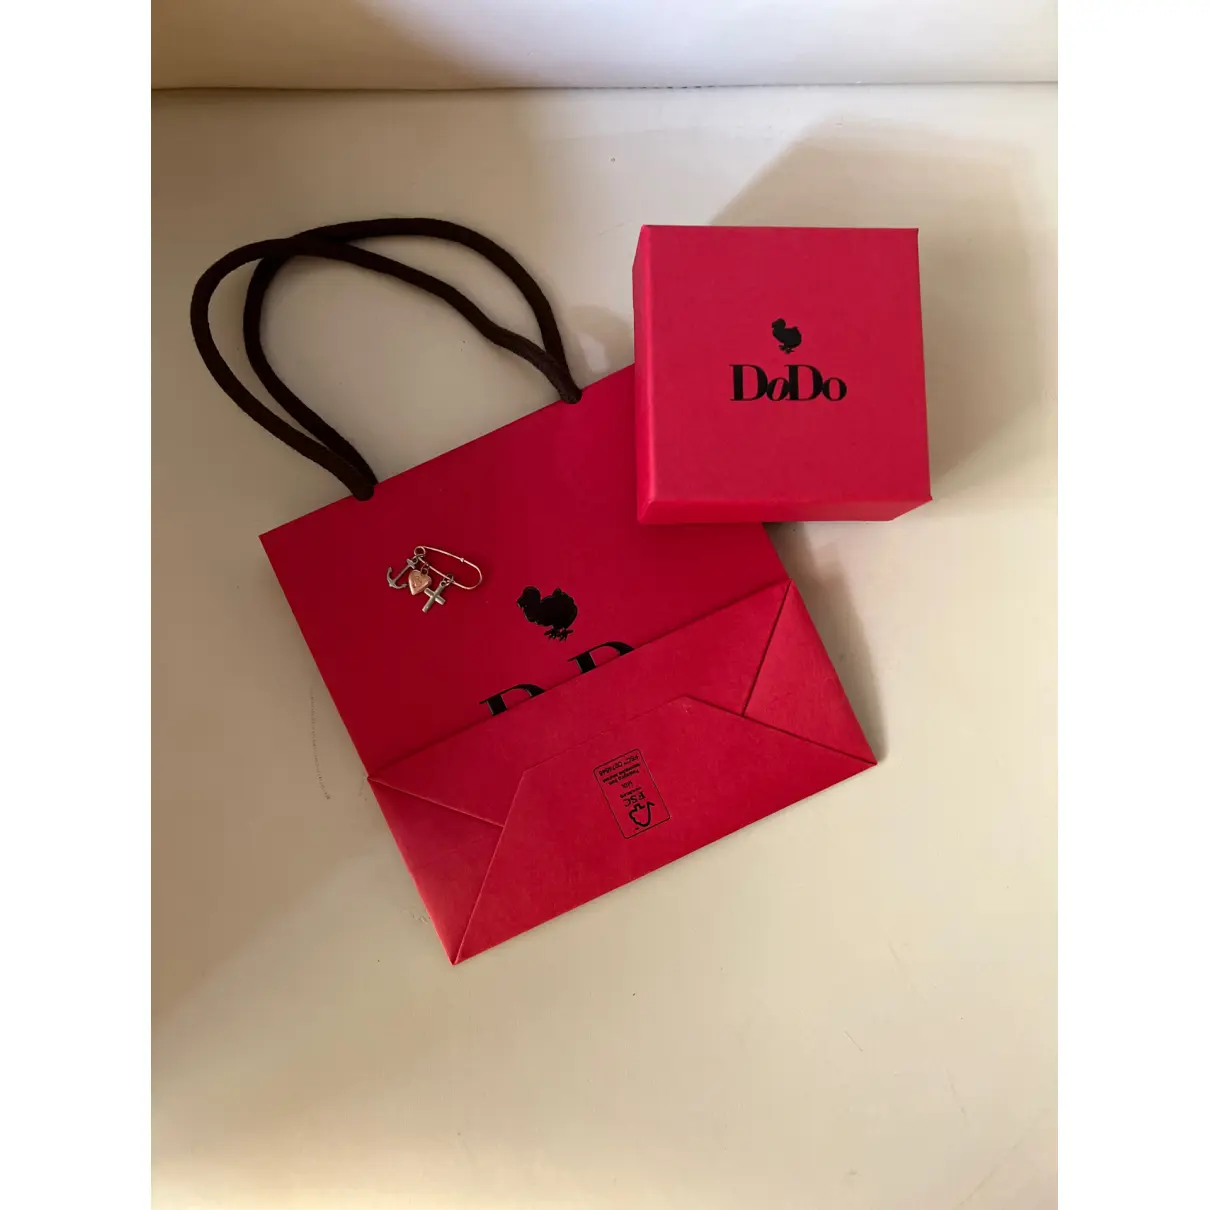 Buy Dodo Dodo pink gold pin & brooche online